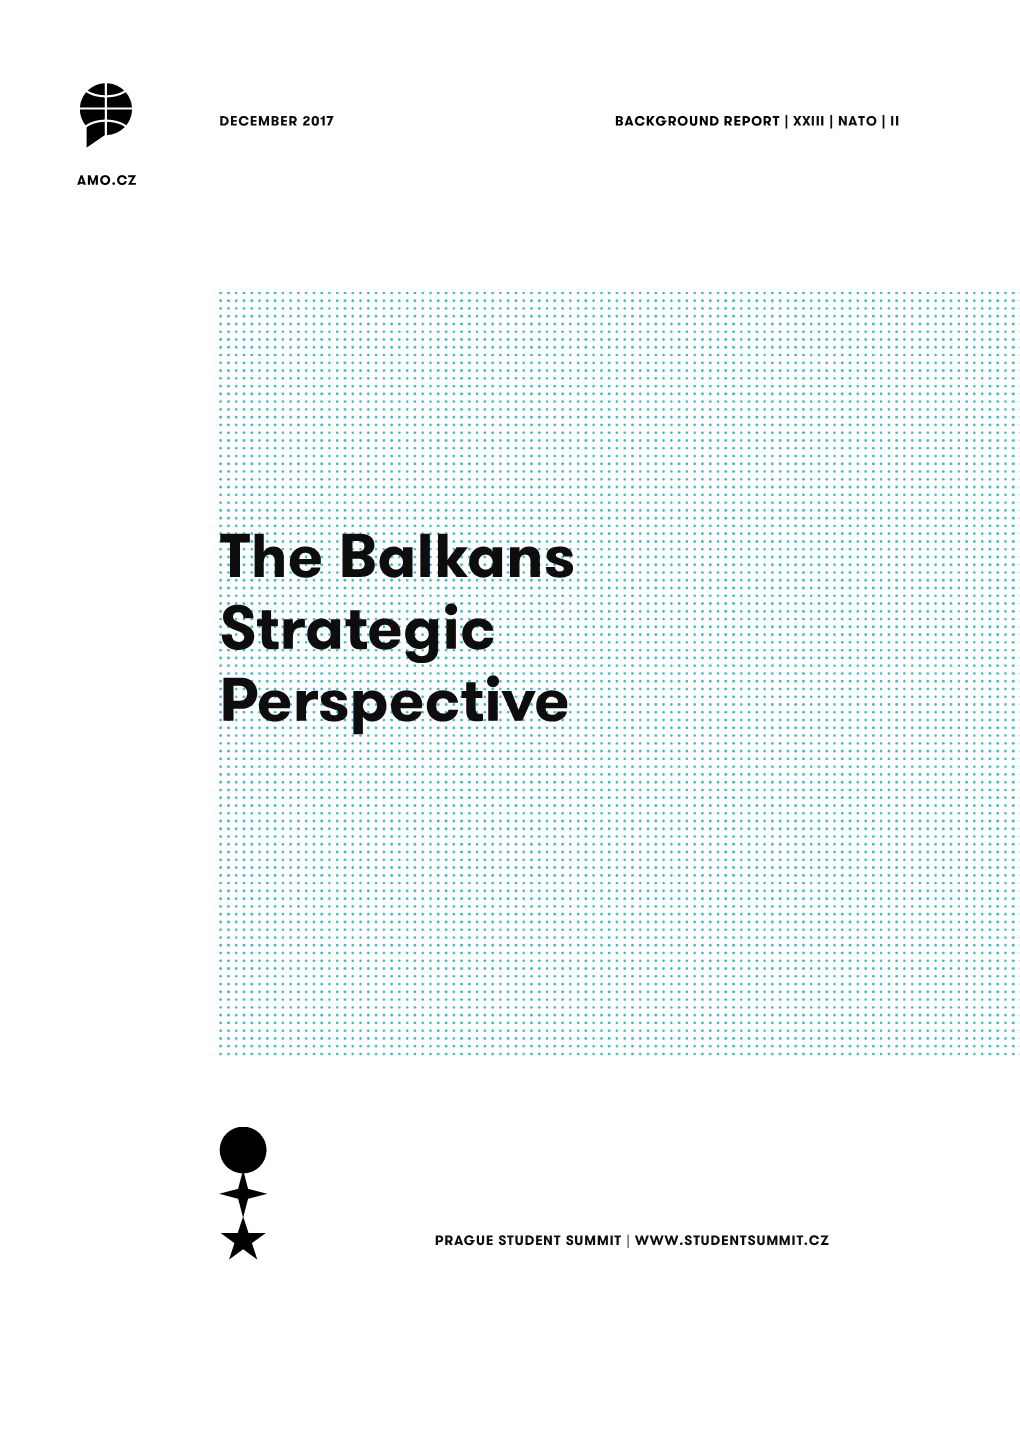 The Balkans Strategic Perspective